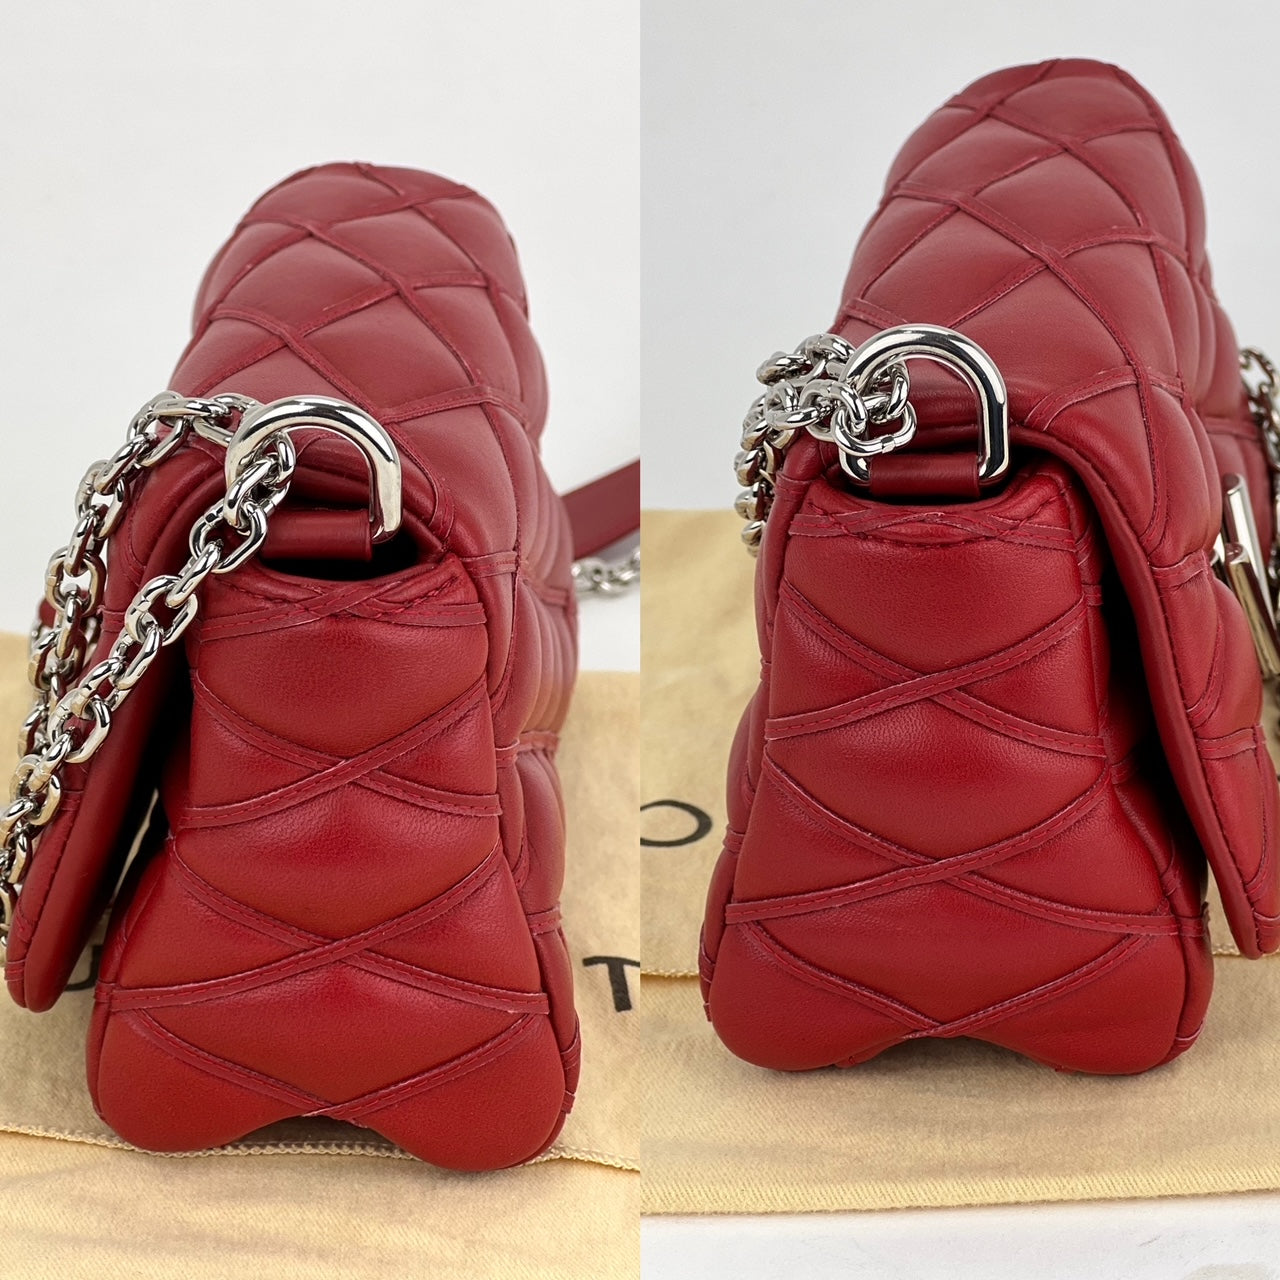 GO-14 GM Malletage Leather - Handbags